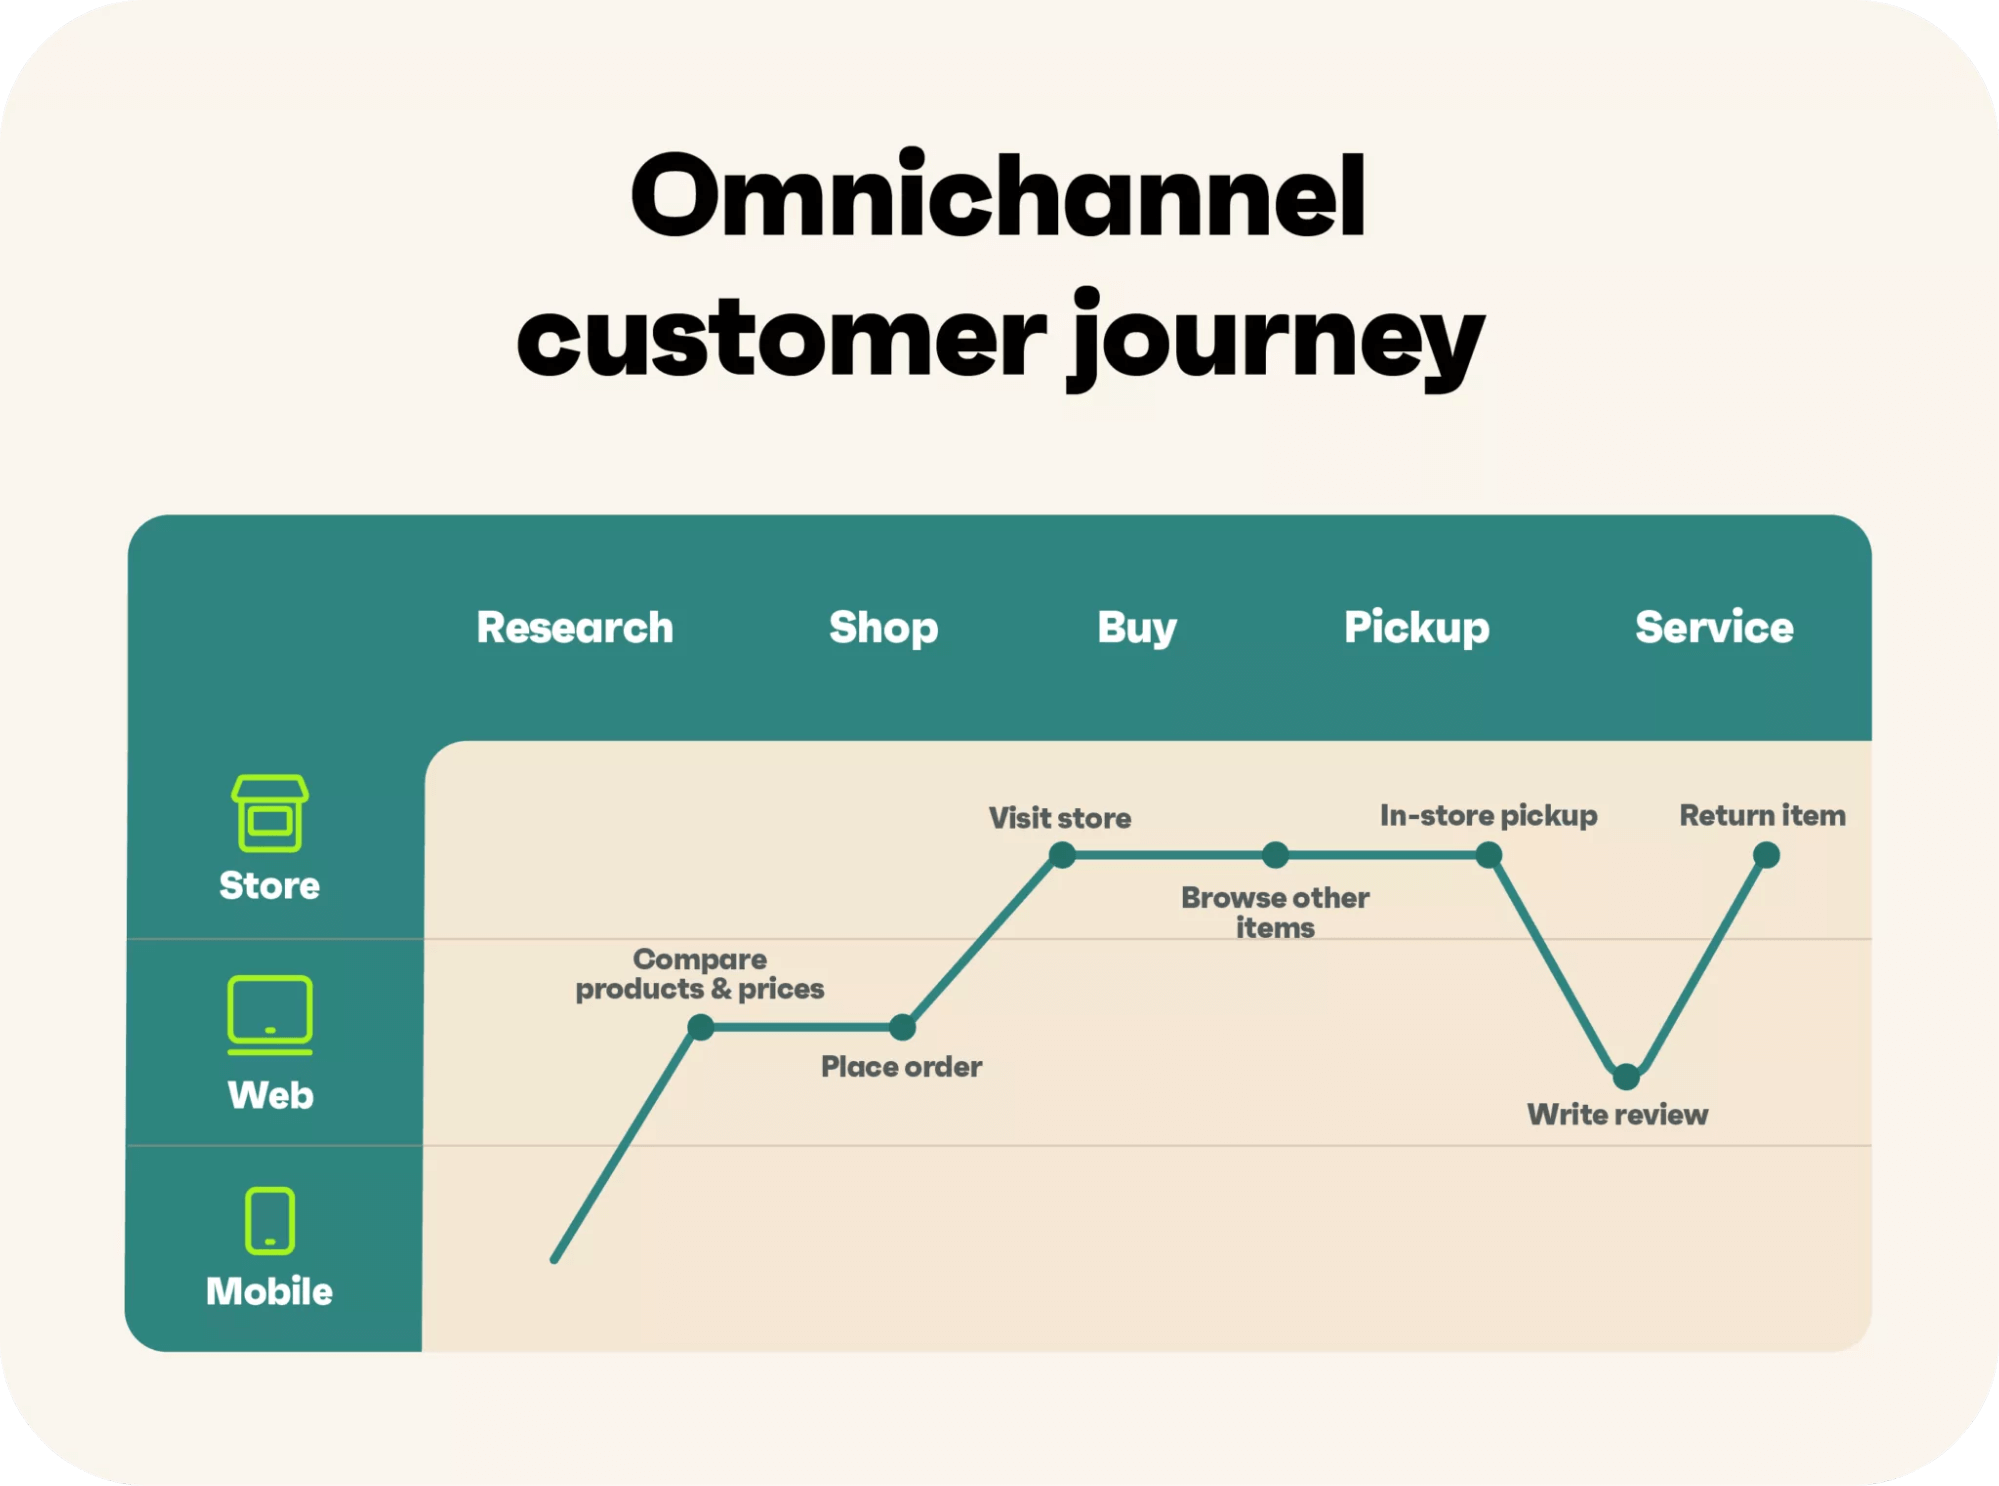 Omnichannel customer journey